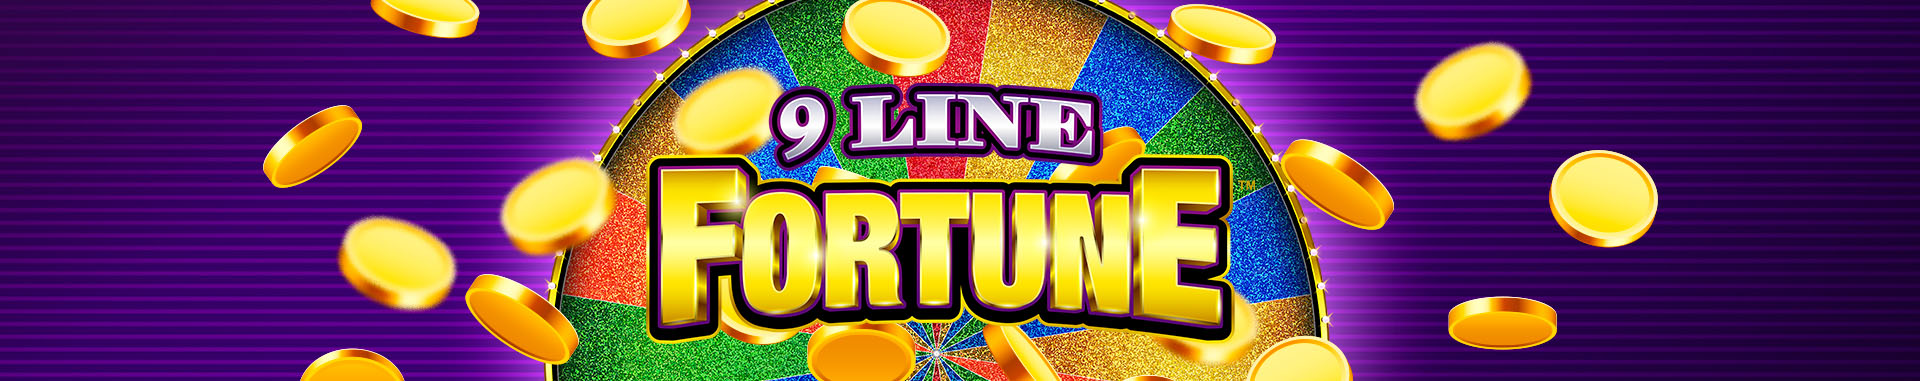 Tragaperras online 9 Line Fortune